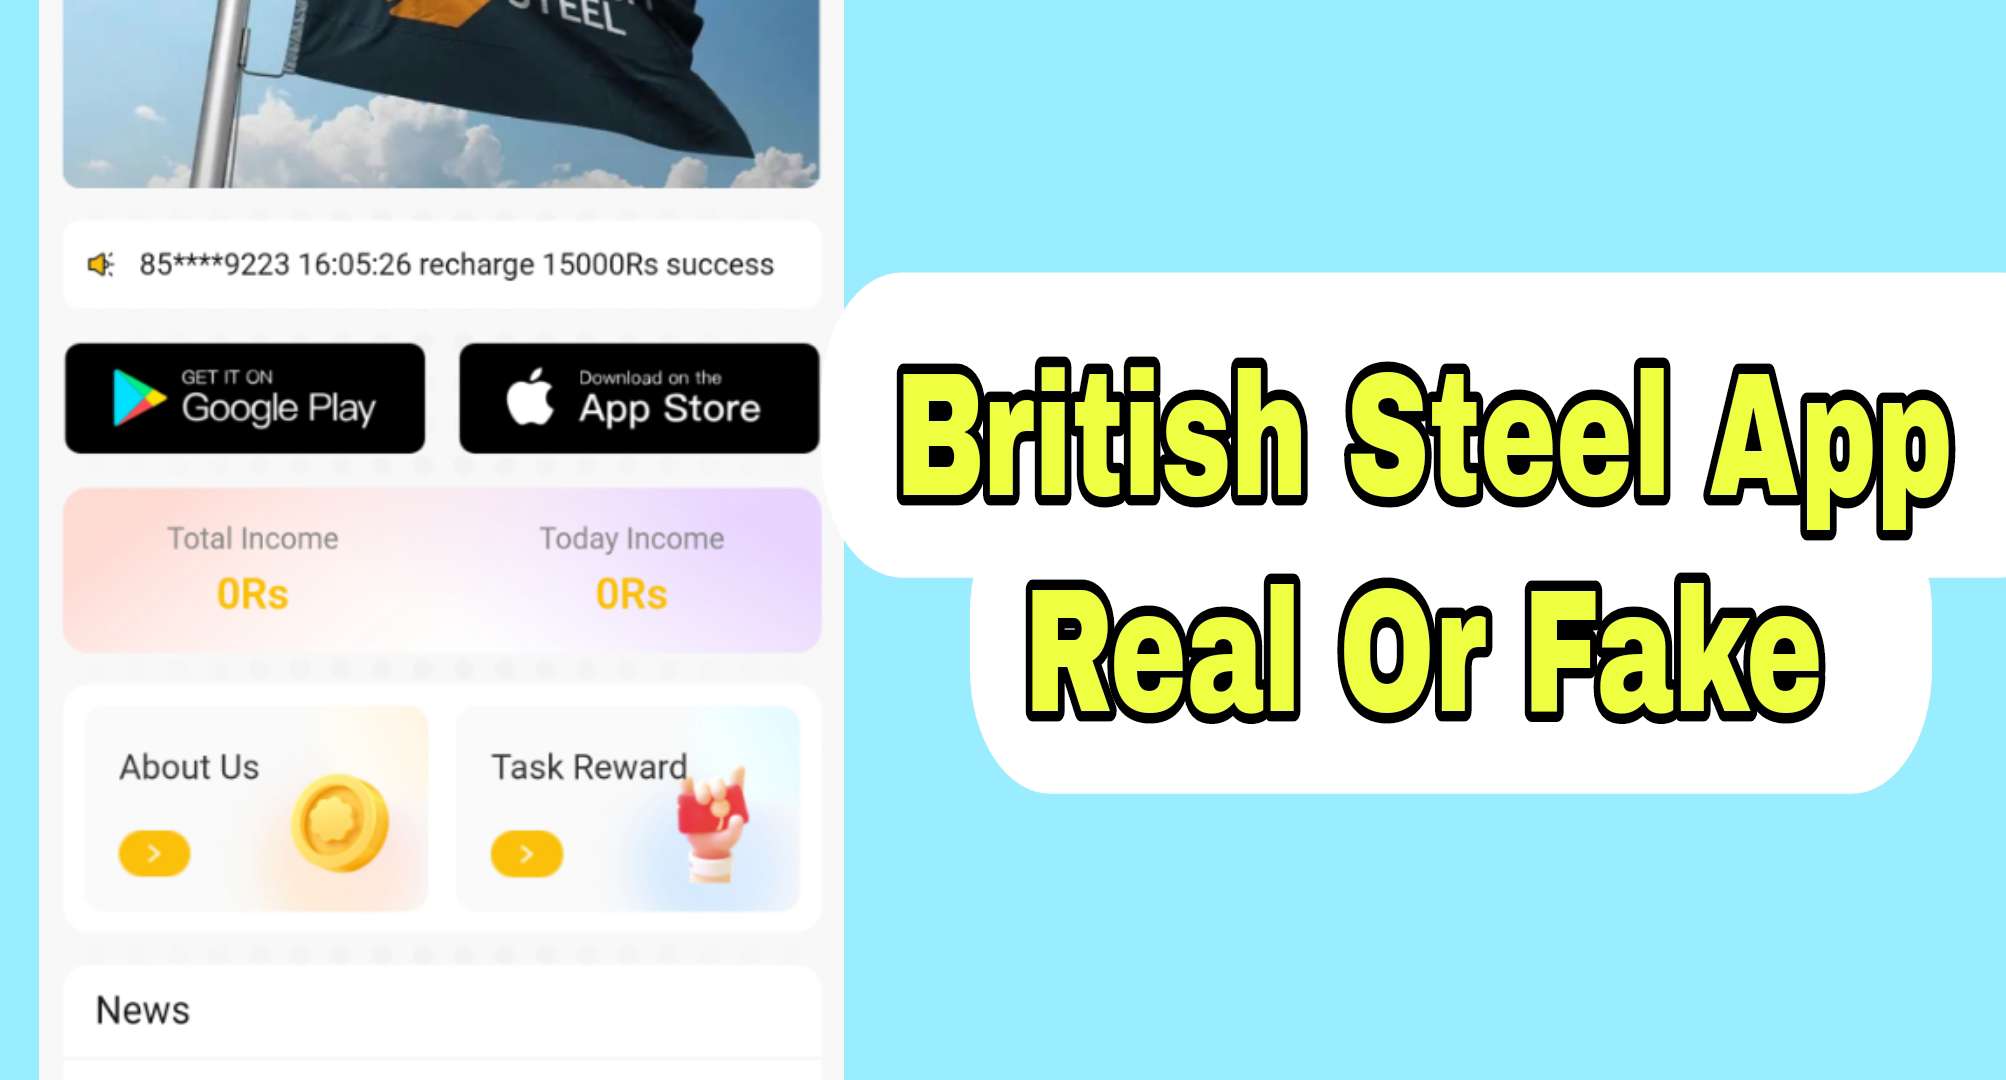 British Steel App Real Or Fake